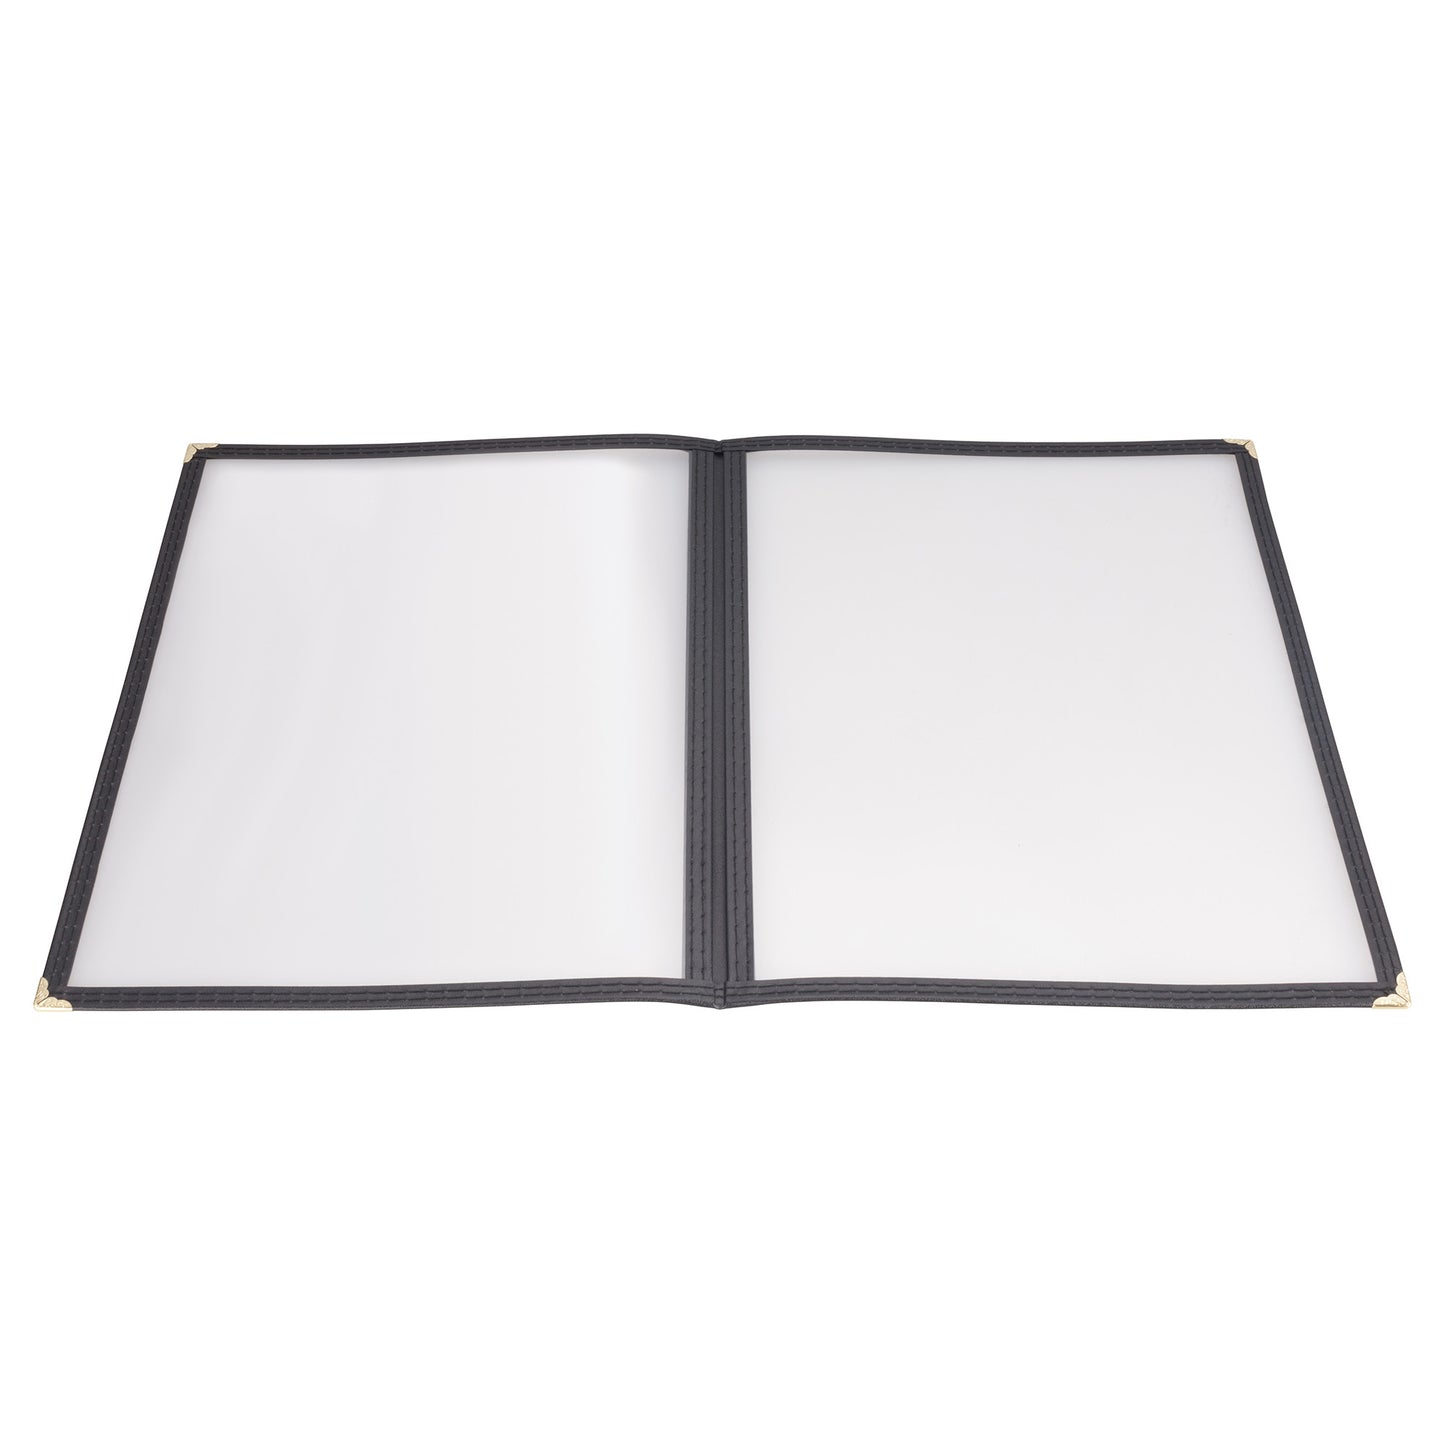 PMCD-14K - Book-Fold Double Panel Menu Cover - Black, 9-9/16 x 15